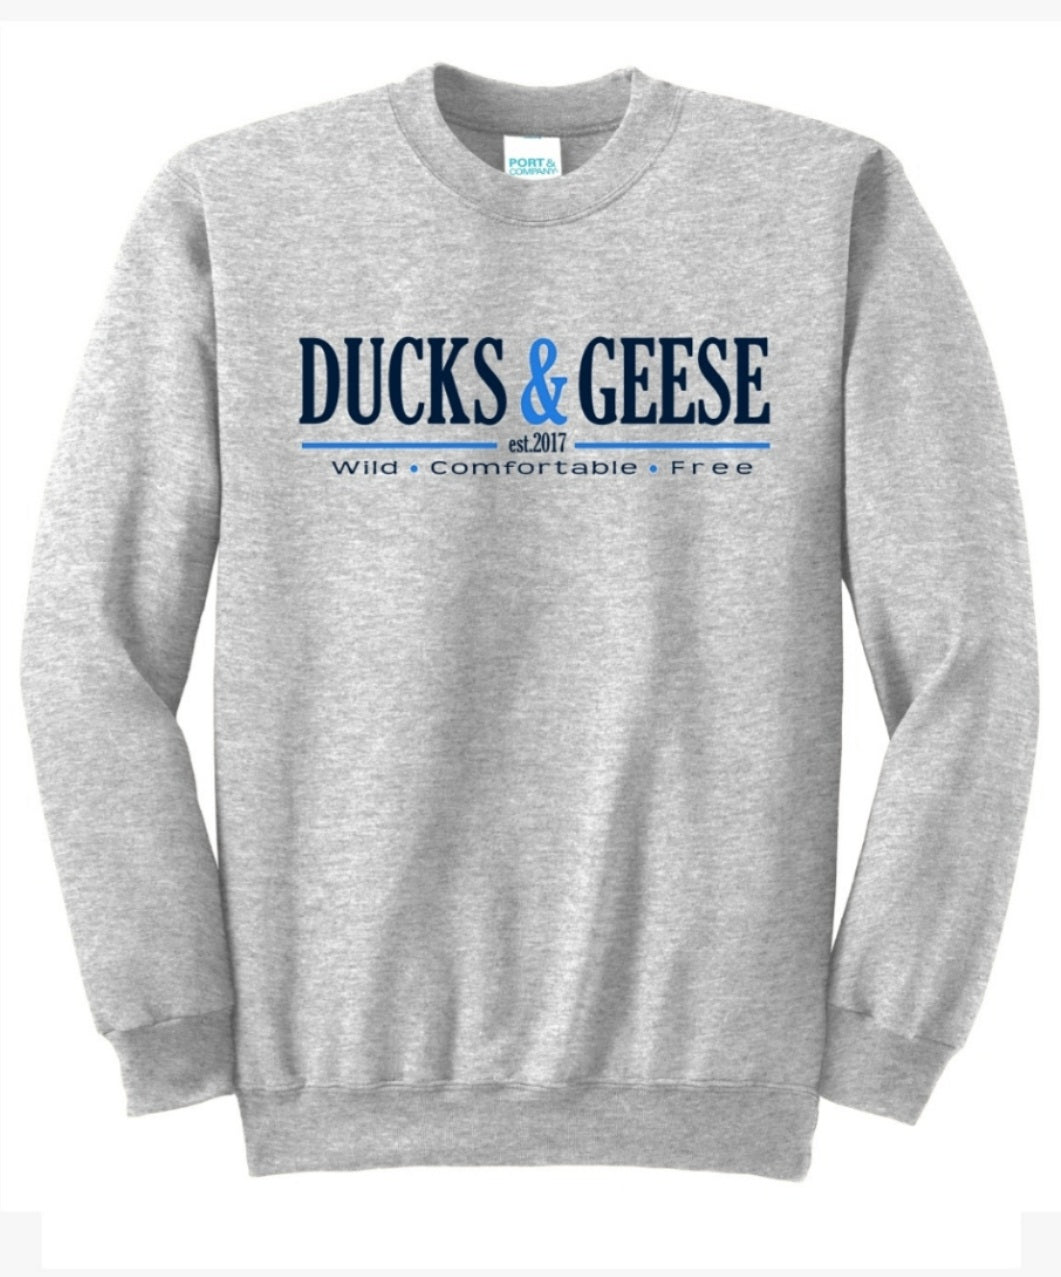 Ducks and geese crewneck